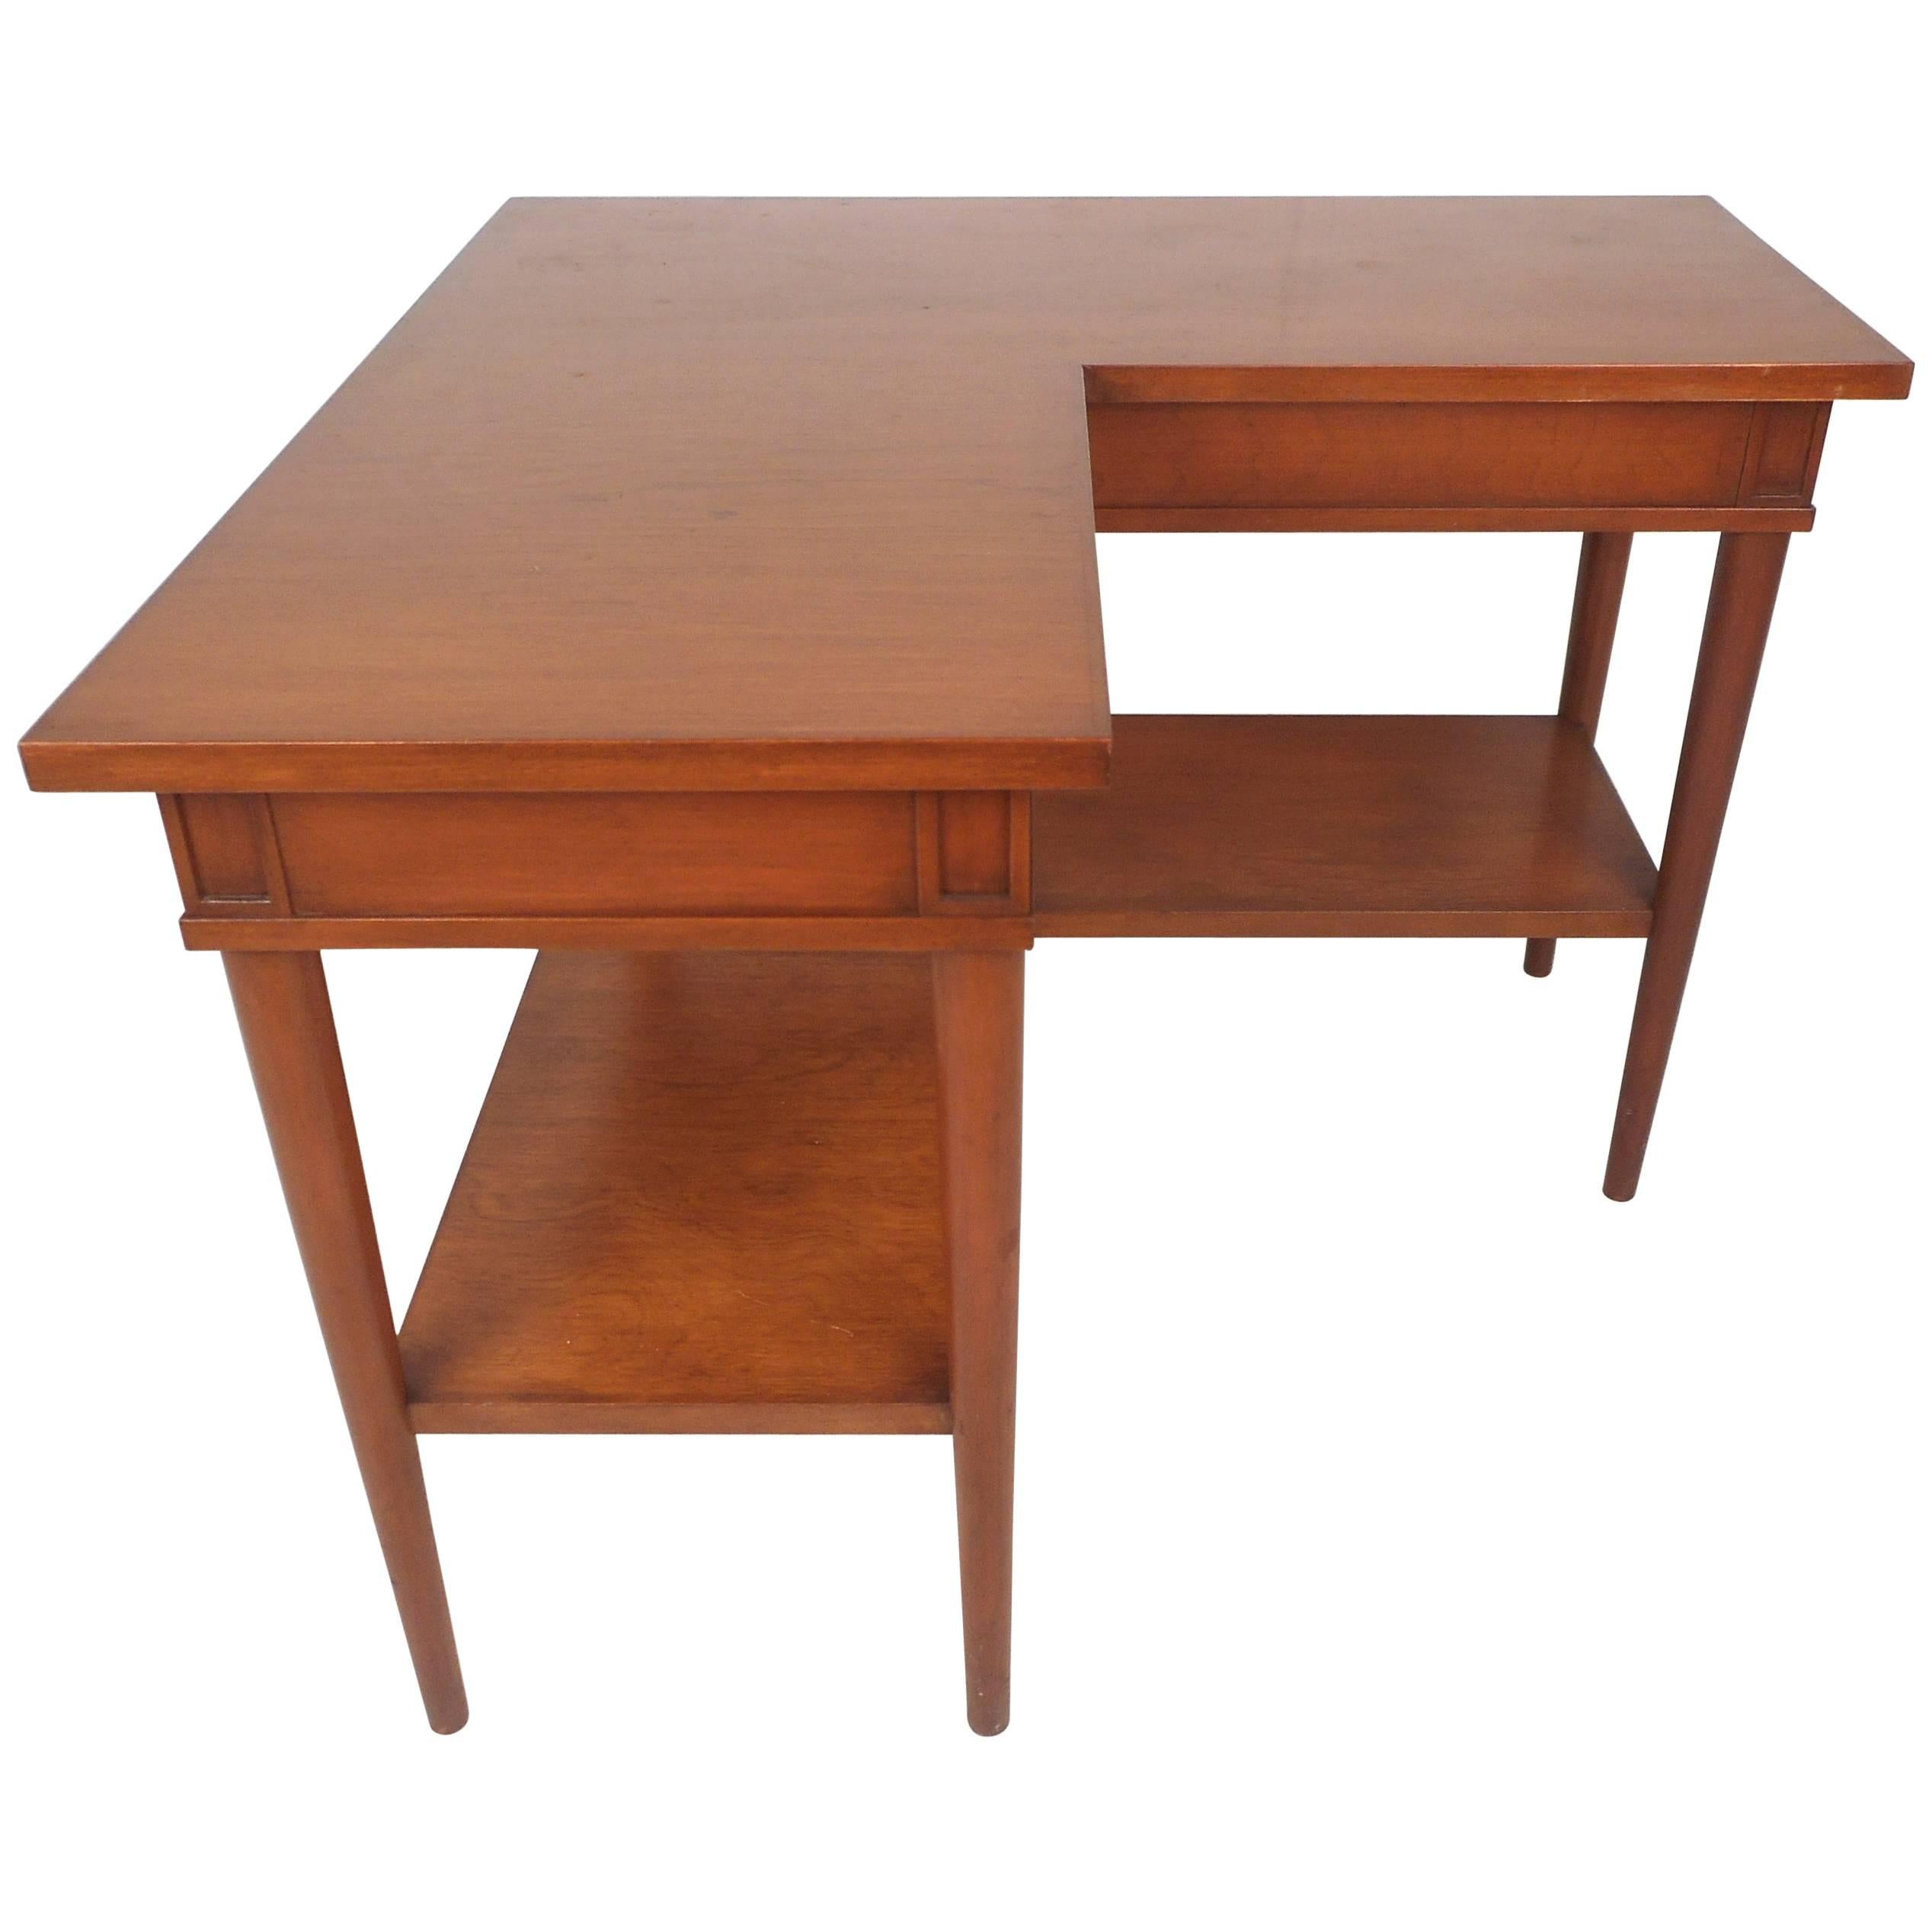 Unusual Mid-Century Modern Walnut Two-Tier Corner Table